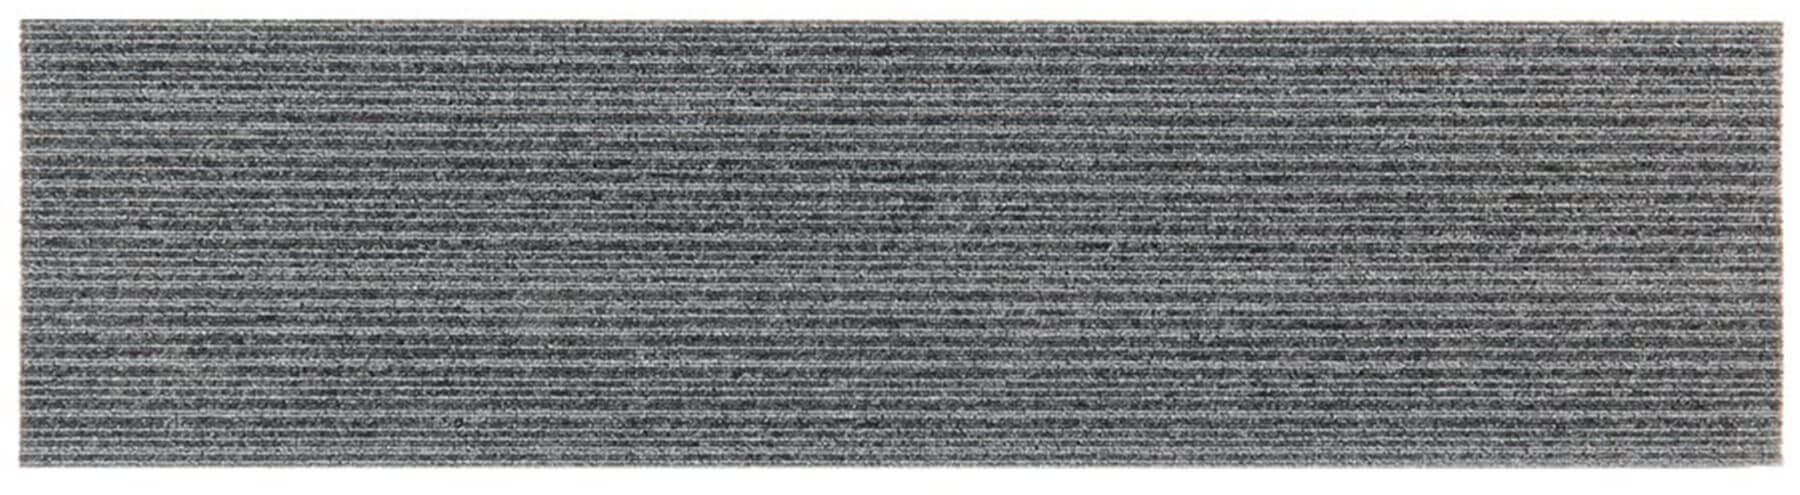 Micra line 1478 grey line plank